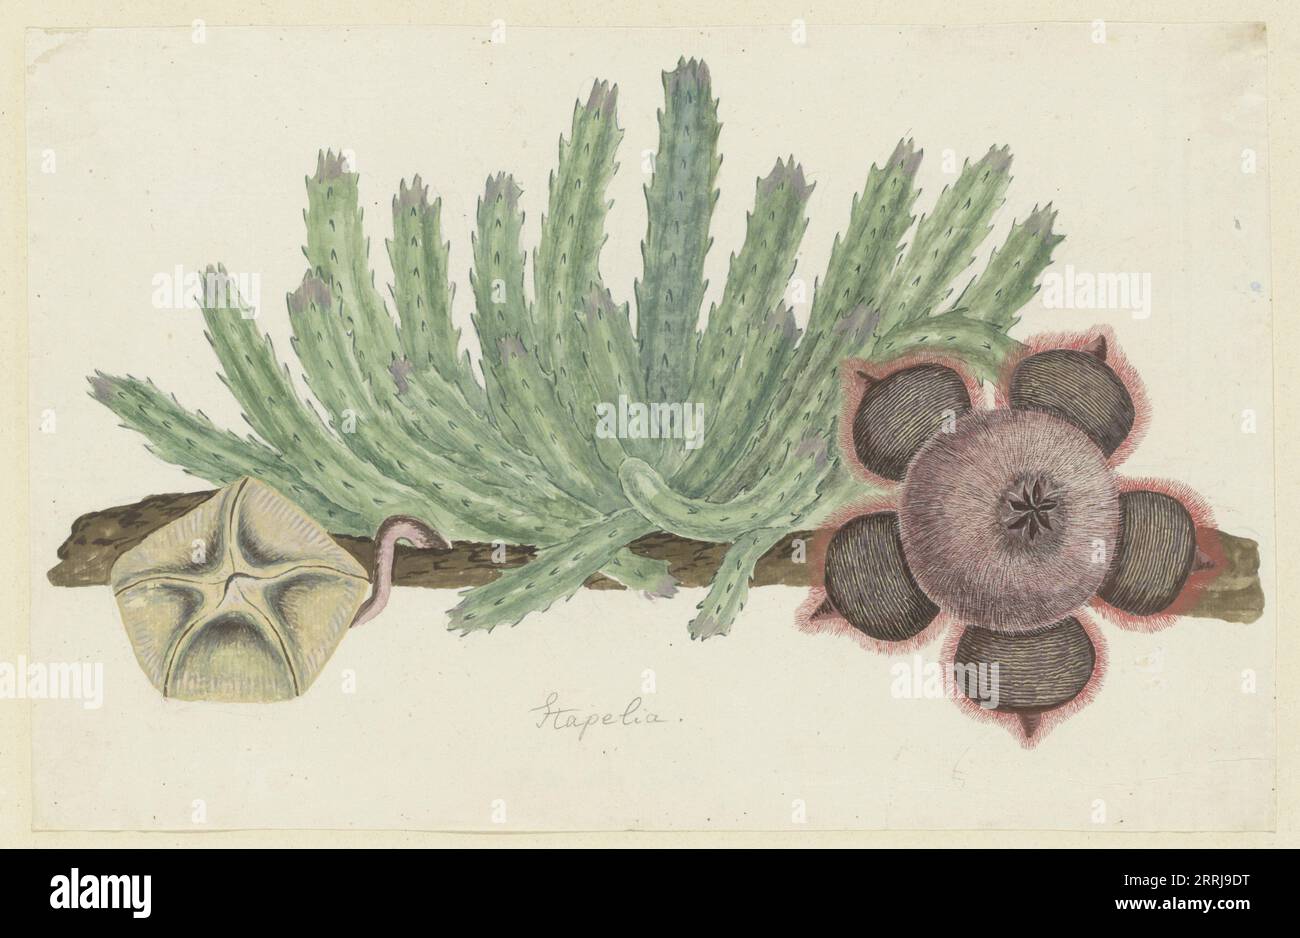 Stapelia hirsuta (L.) (Starfish flower), 1777-1786. Stock Photo